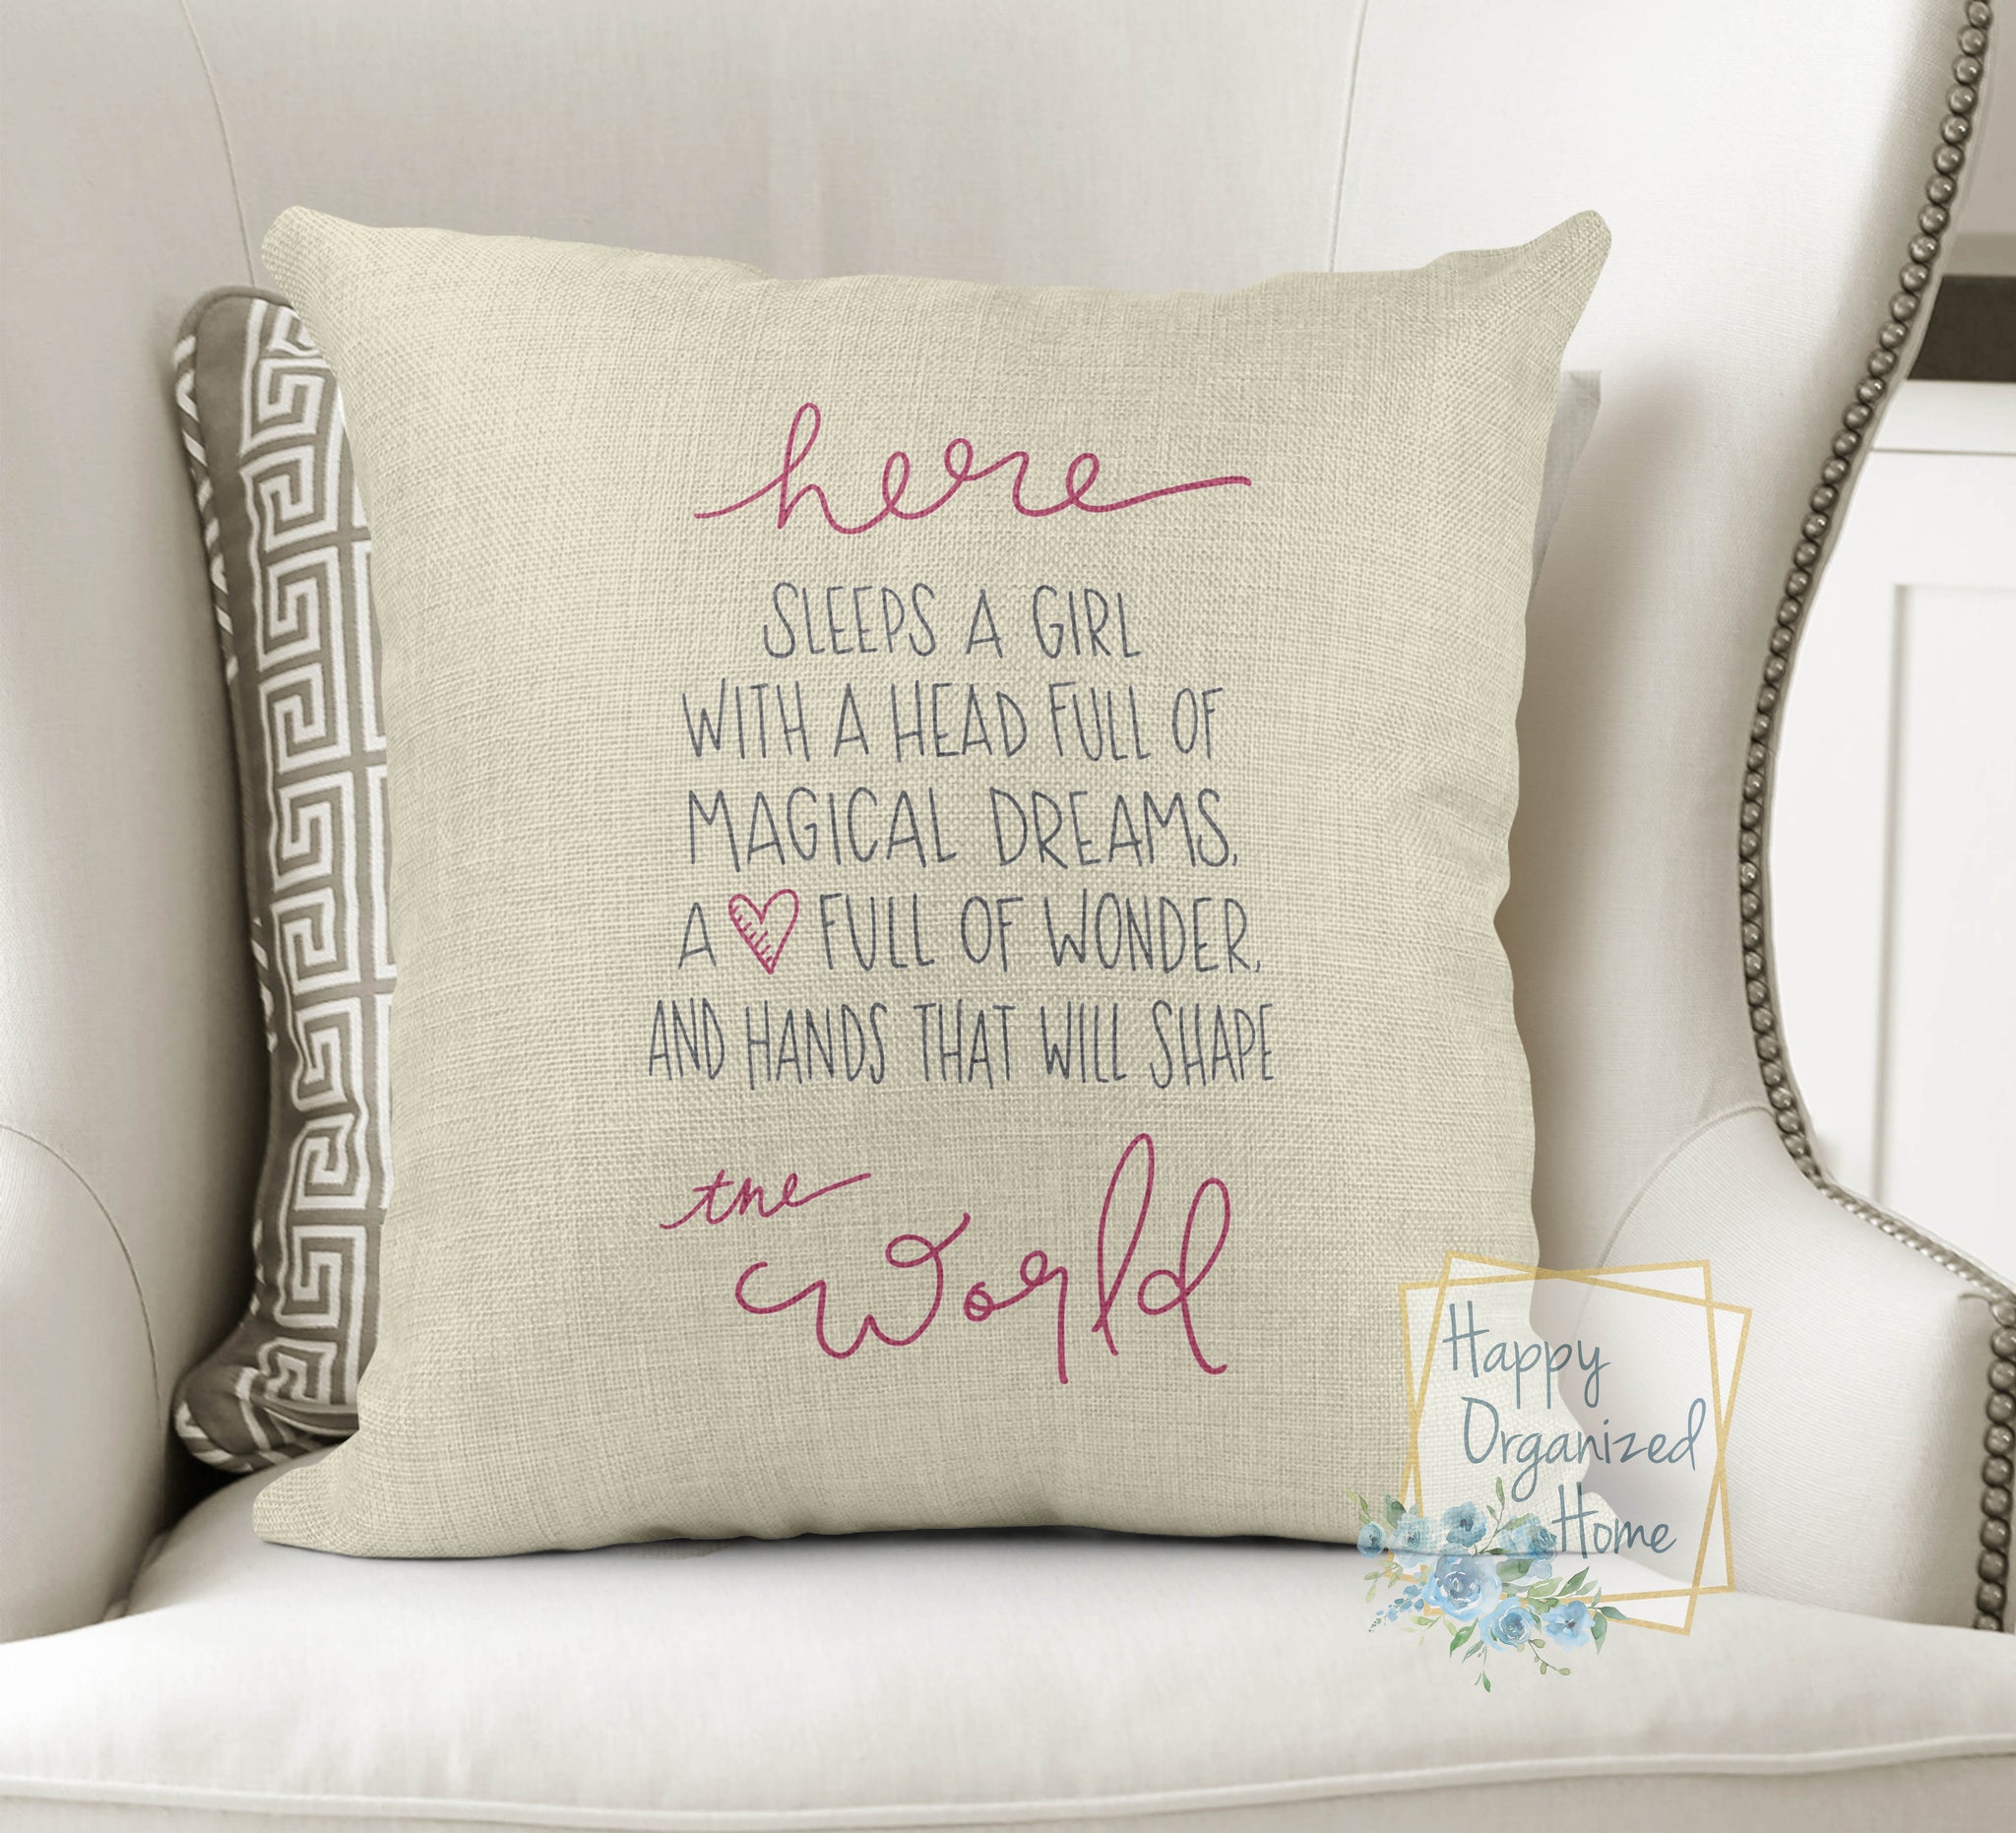 And here sleeps a girl -  Home Decor Pillow